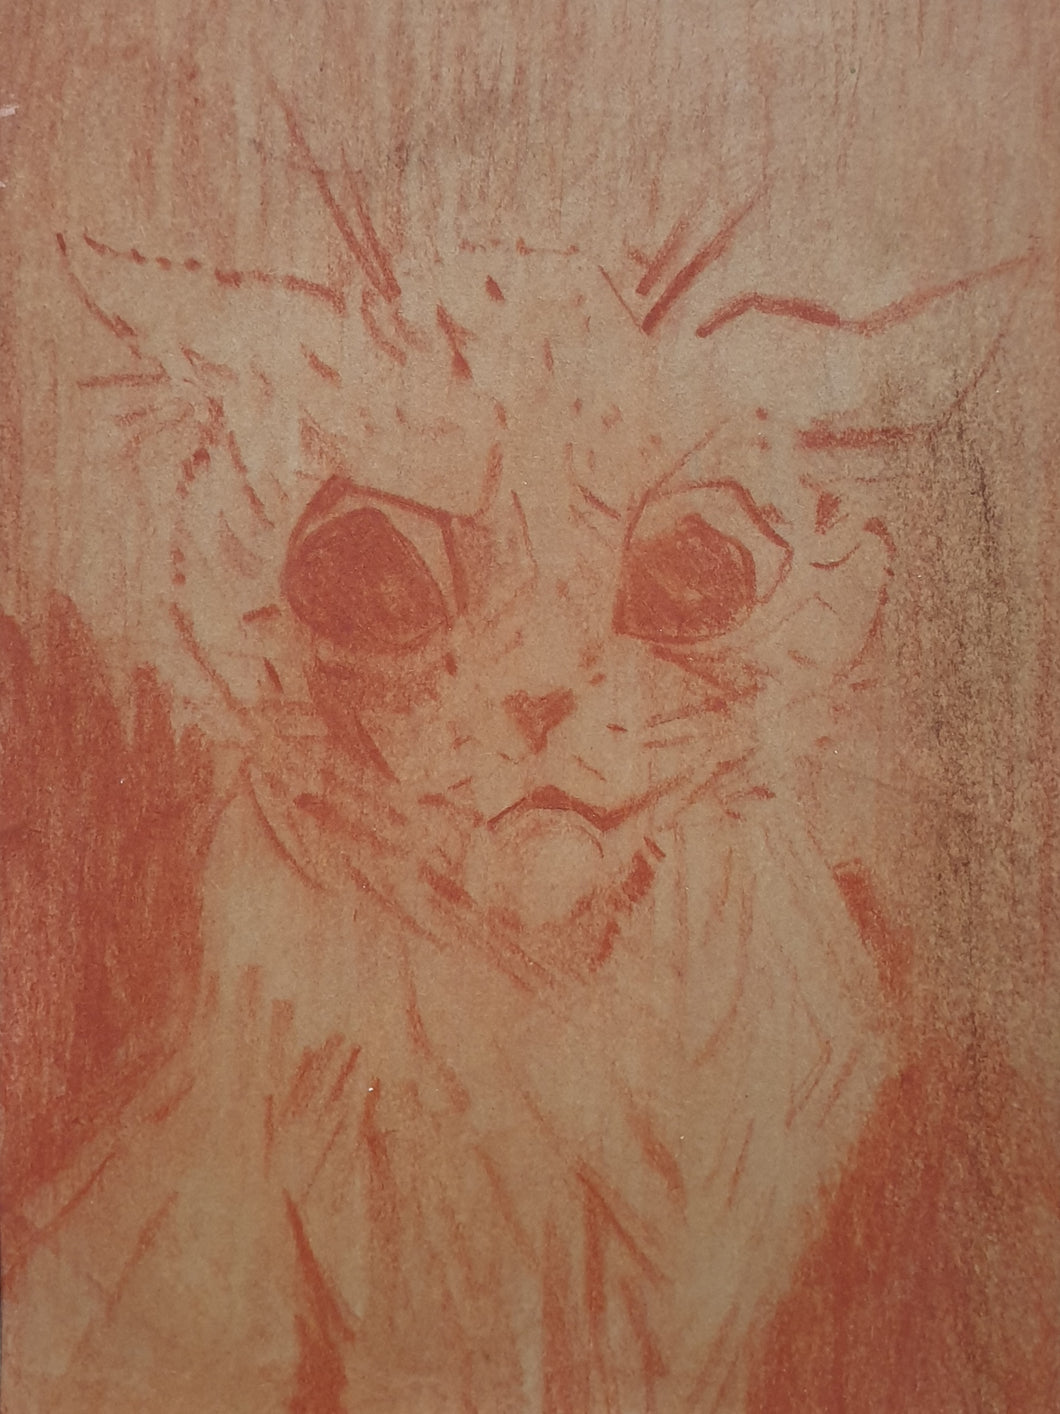 Louis Wain Portrait Of A Scowling Cat